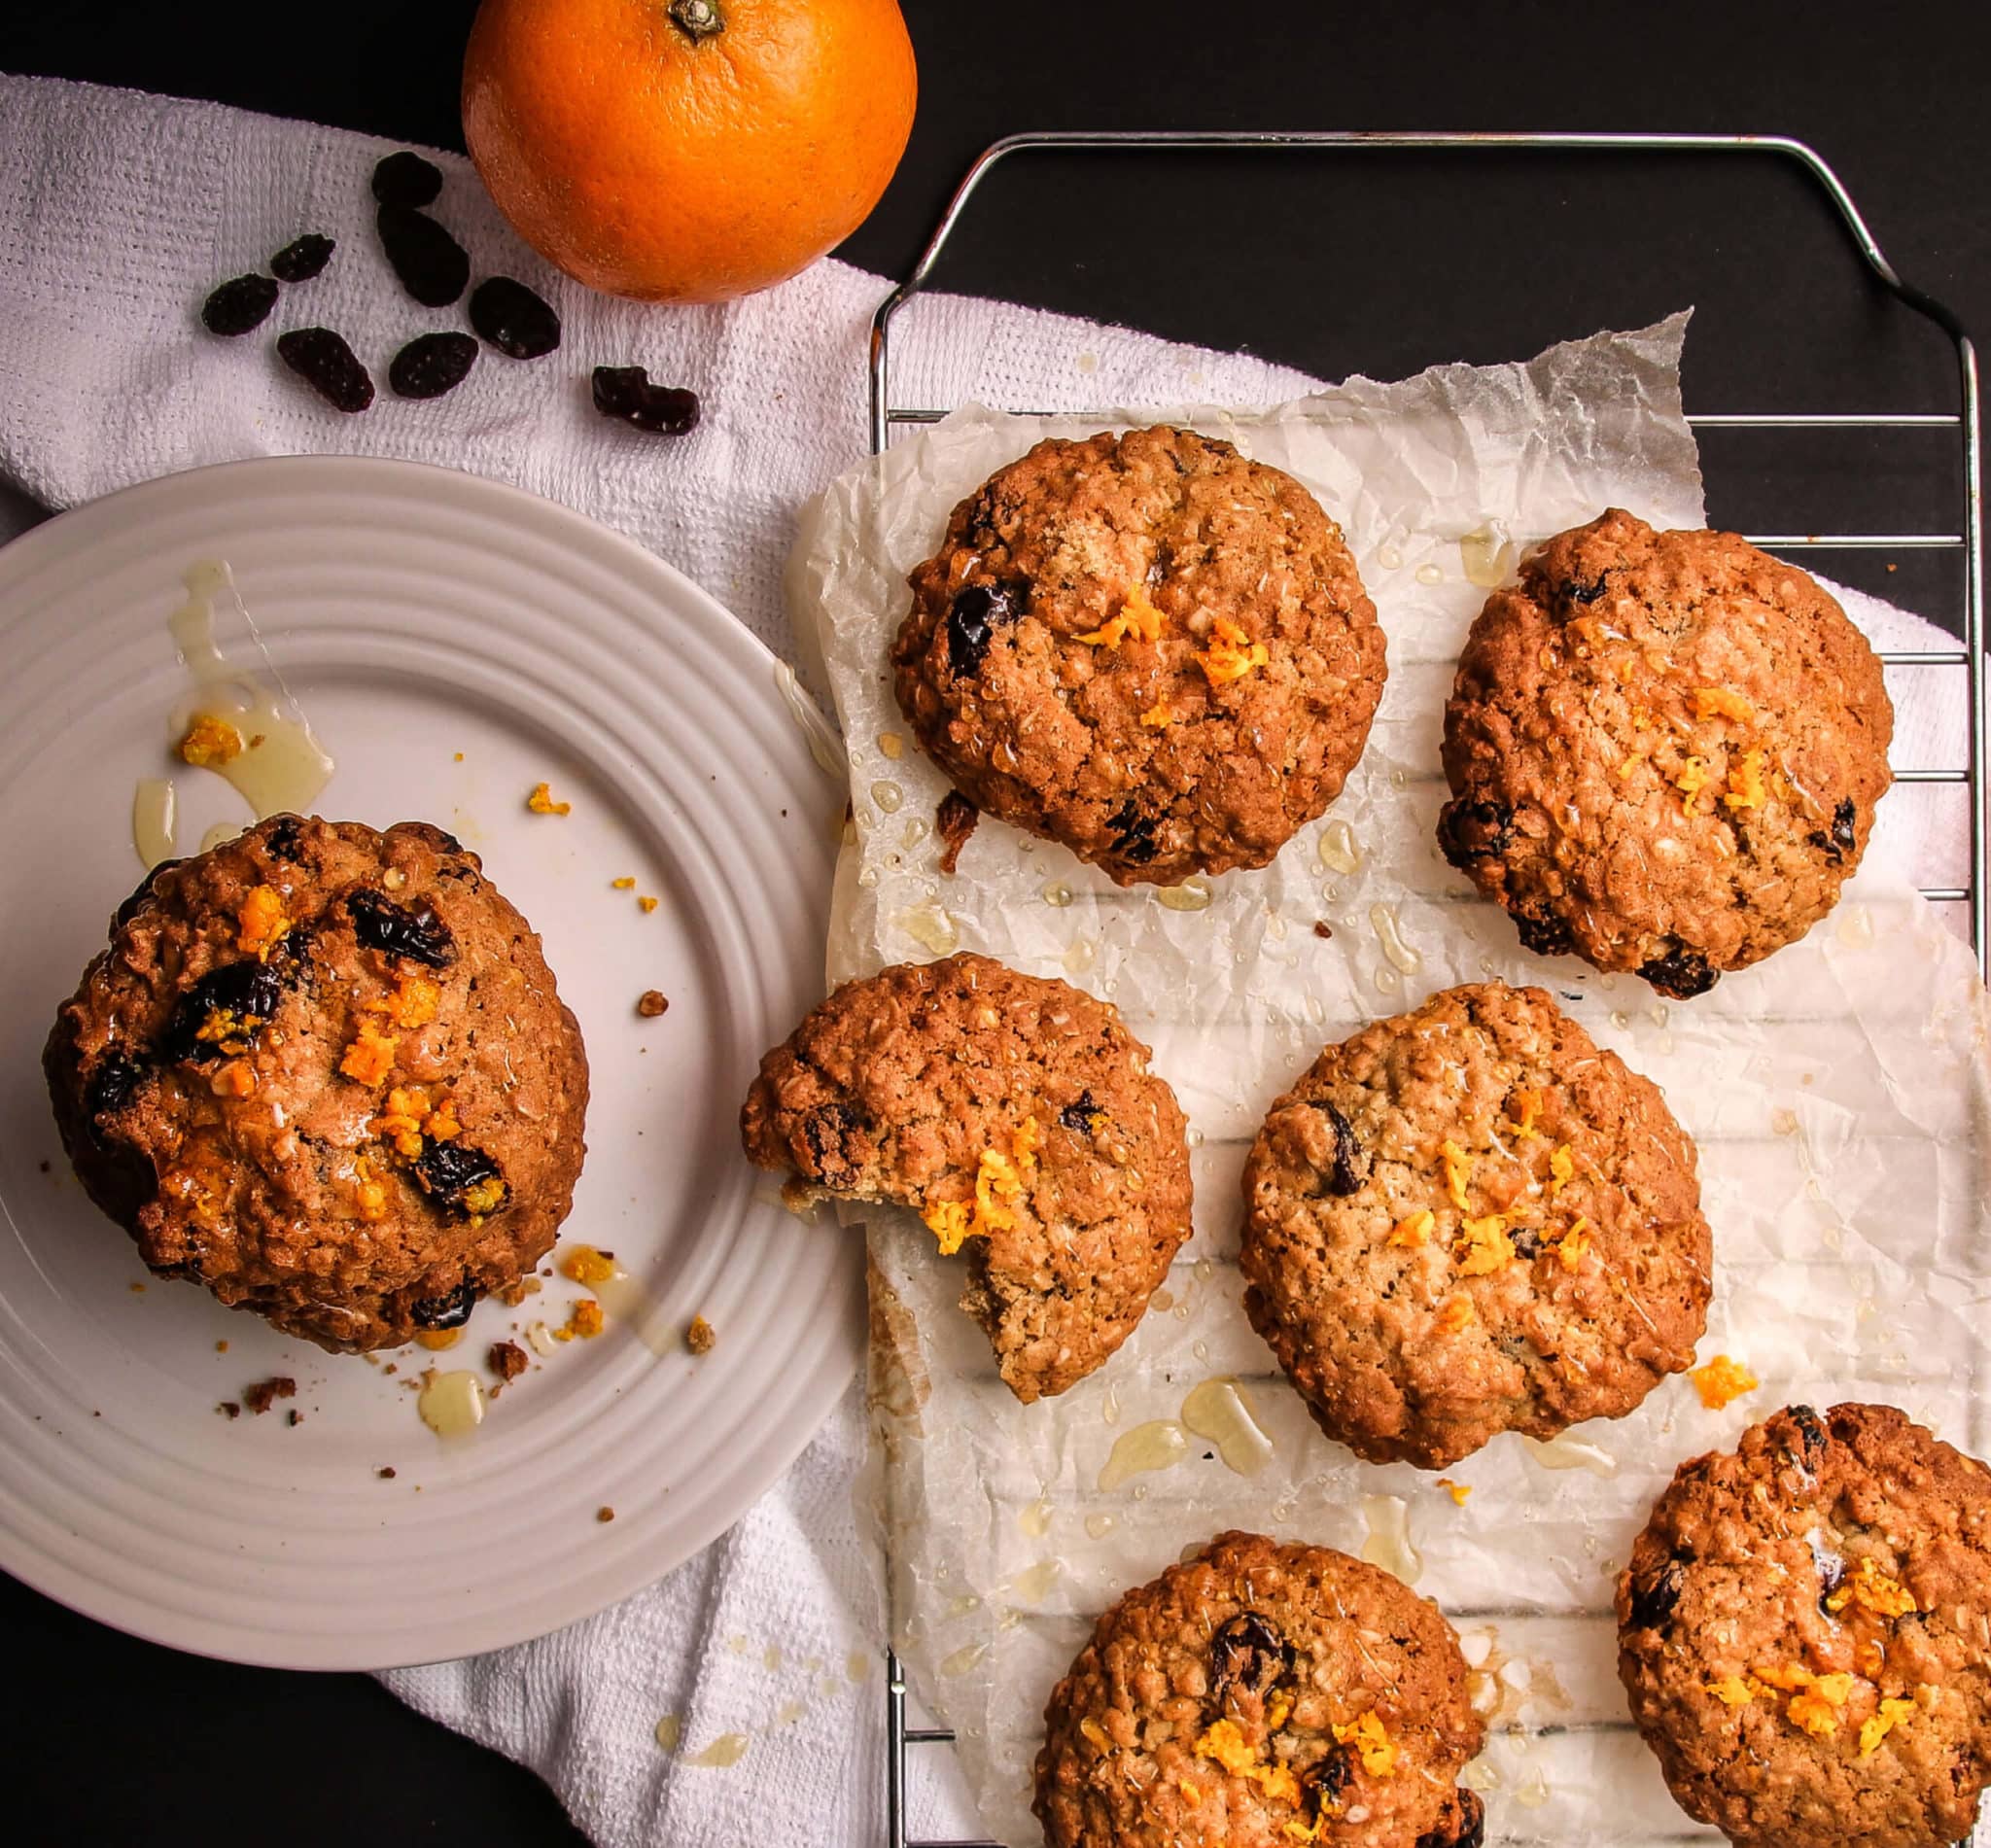 TMC Recipe Of The Week: Orange, Oat and Raisin Cookies